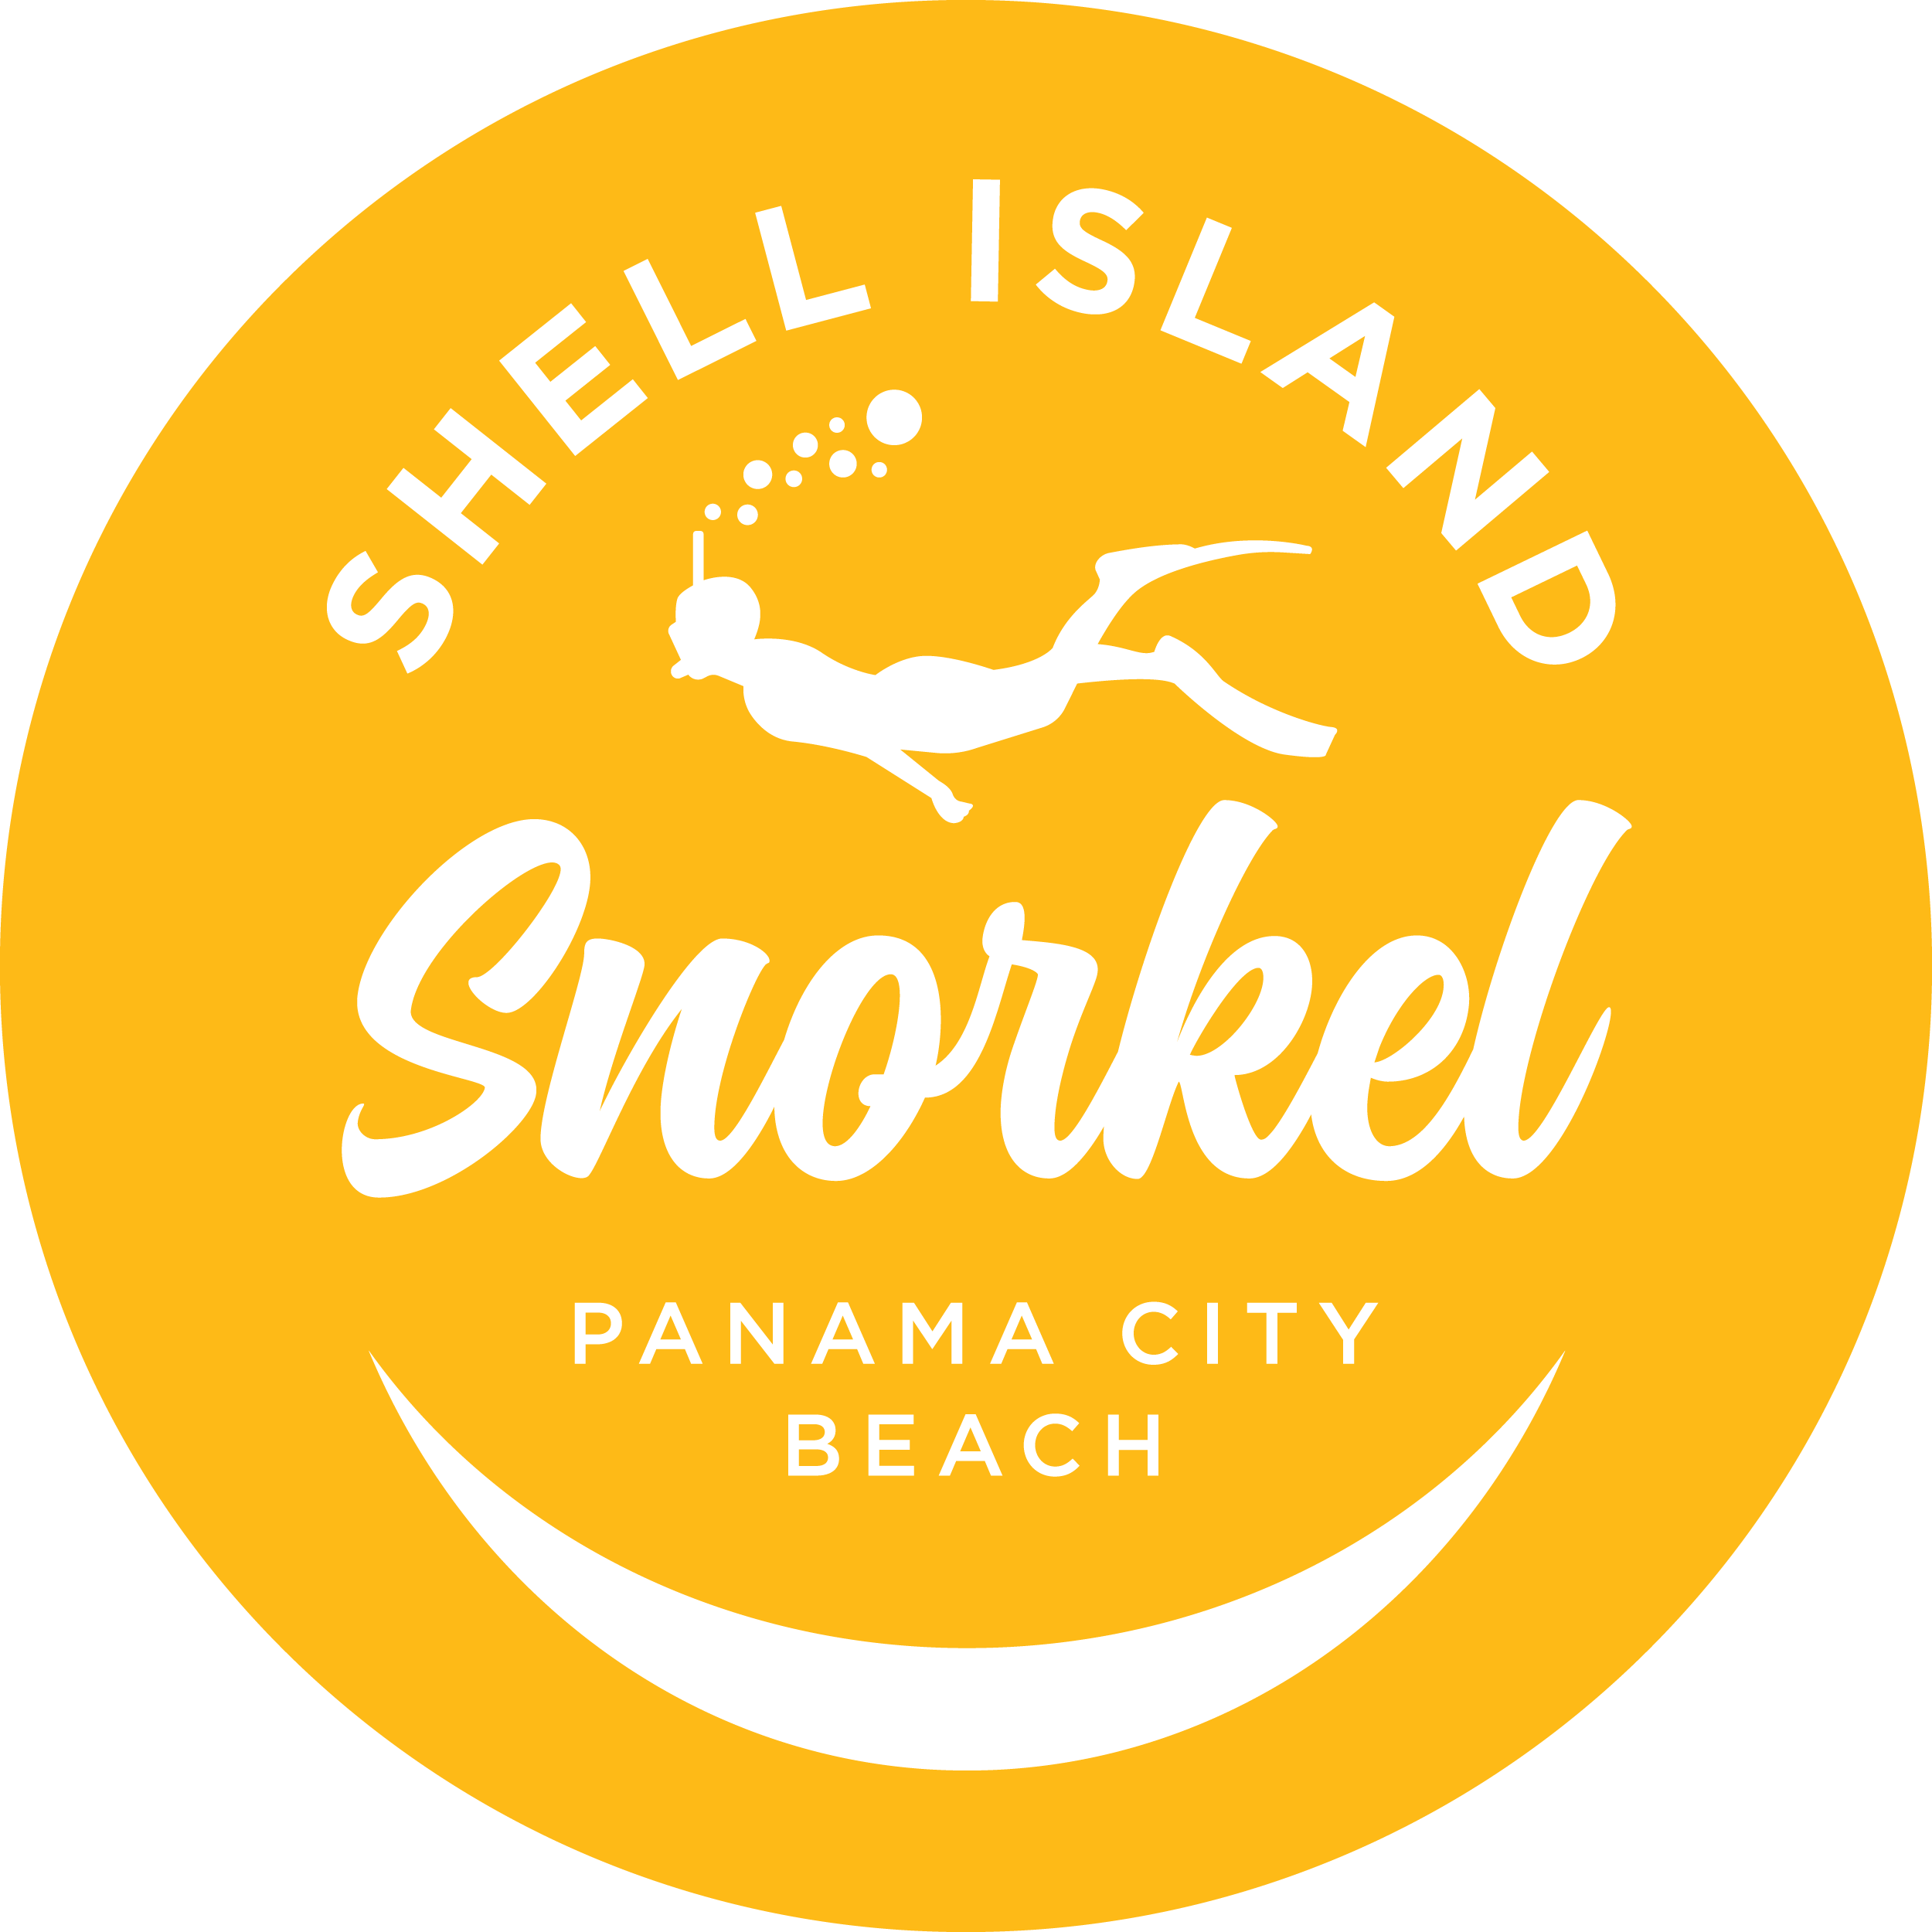 Shell Island Shuttle